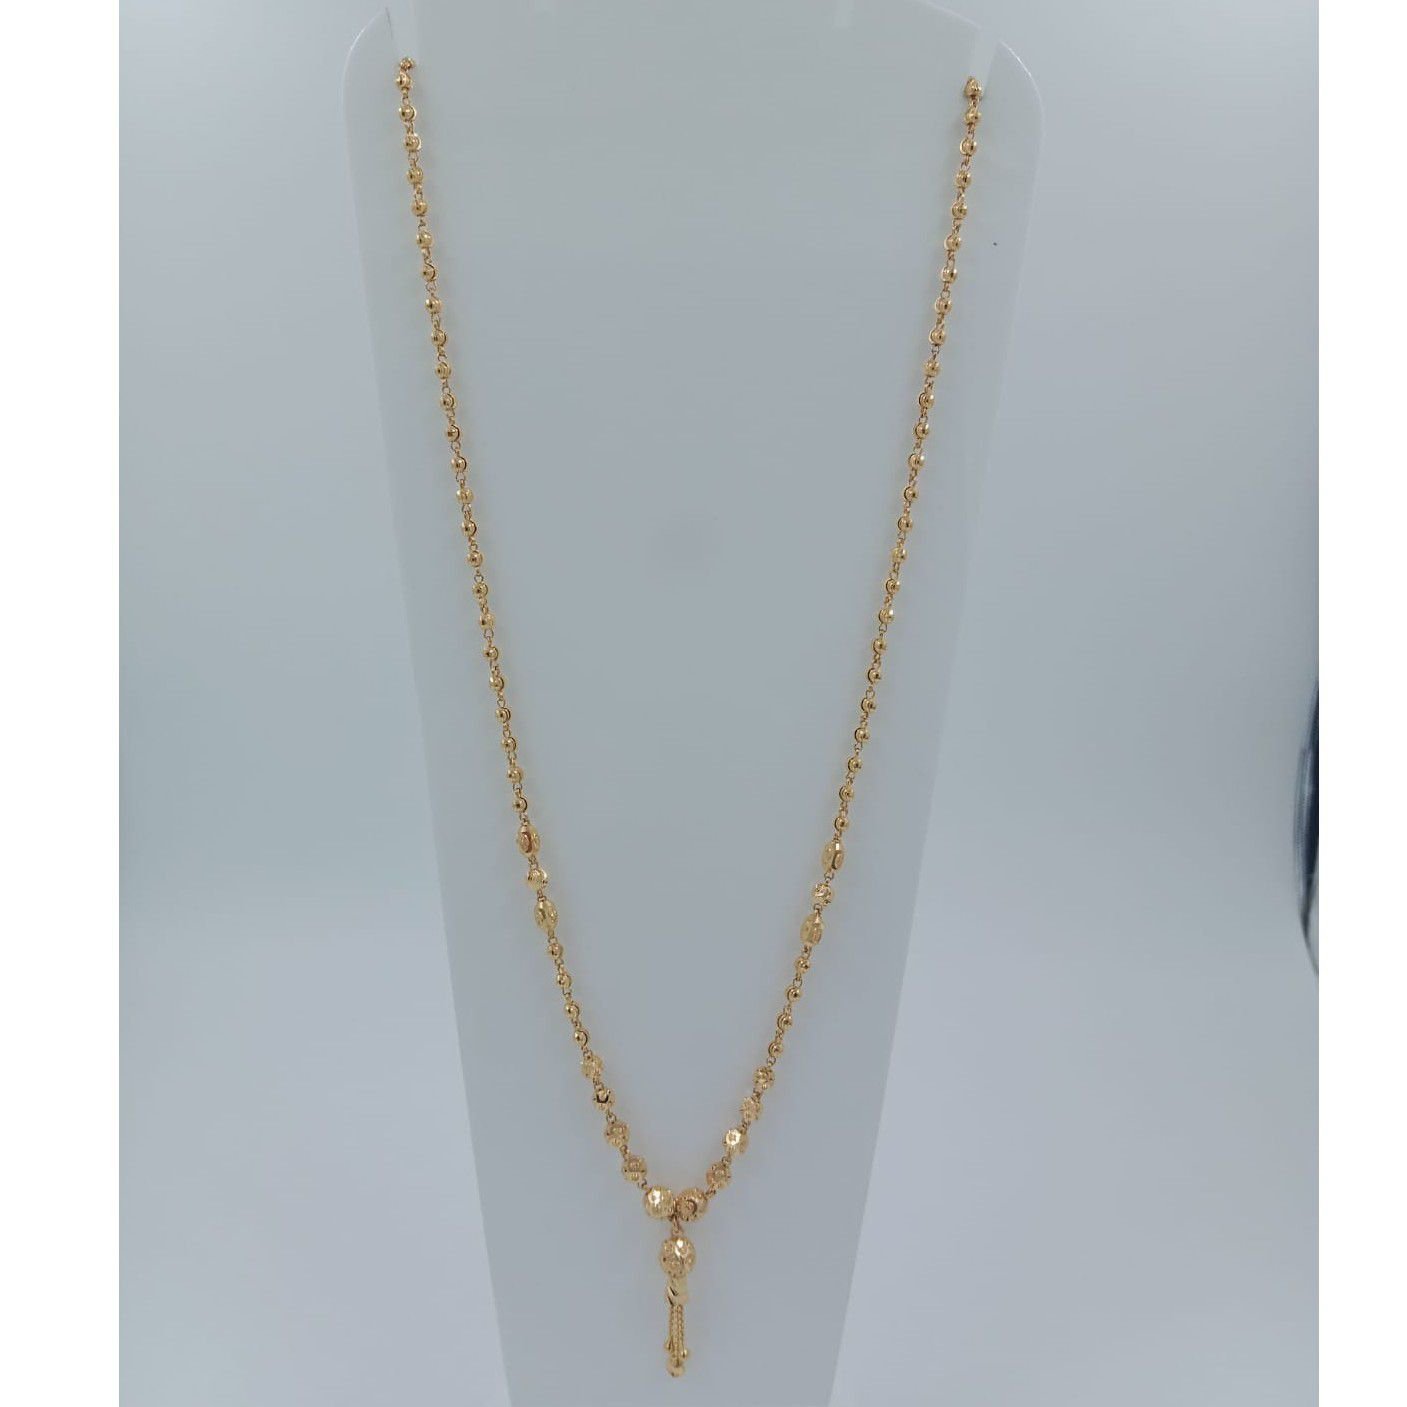 916 Gold Vartical Design Necklace Ladies